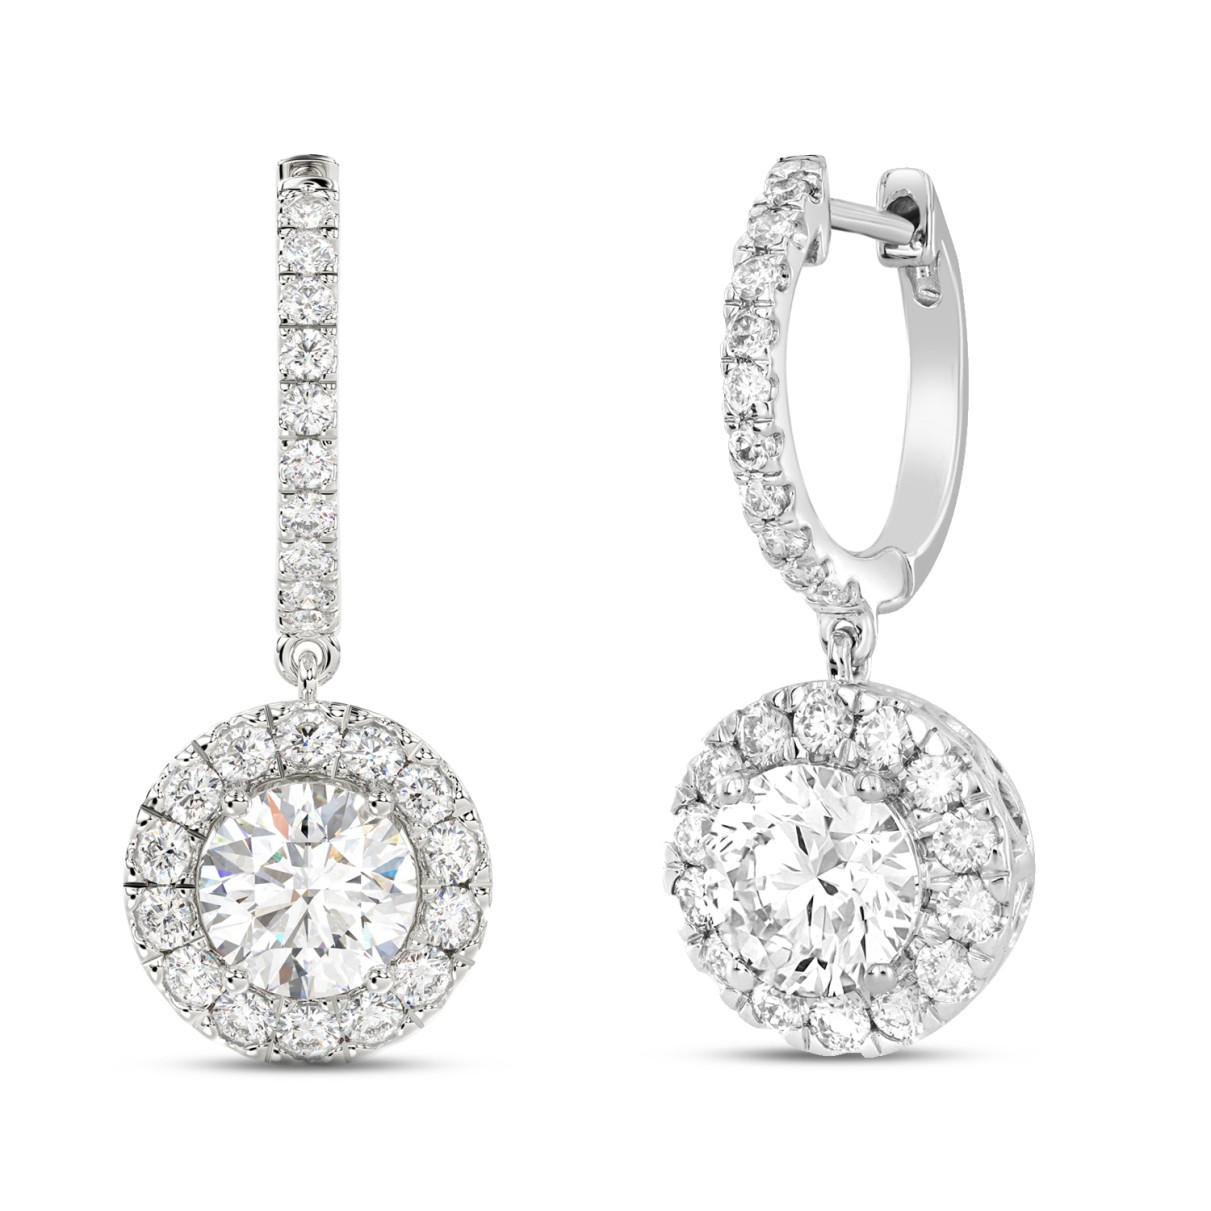 LADIES EARRINGS 3CT ROUND DIAMOND 14K WHITE GOLD (CENTER STONE ROUND DIAMOND 2CT )